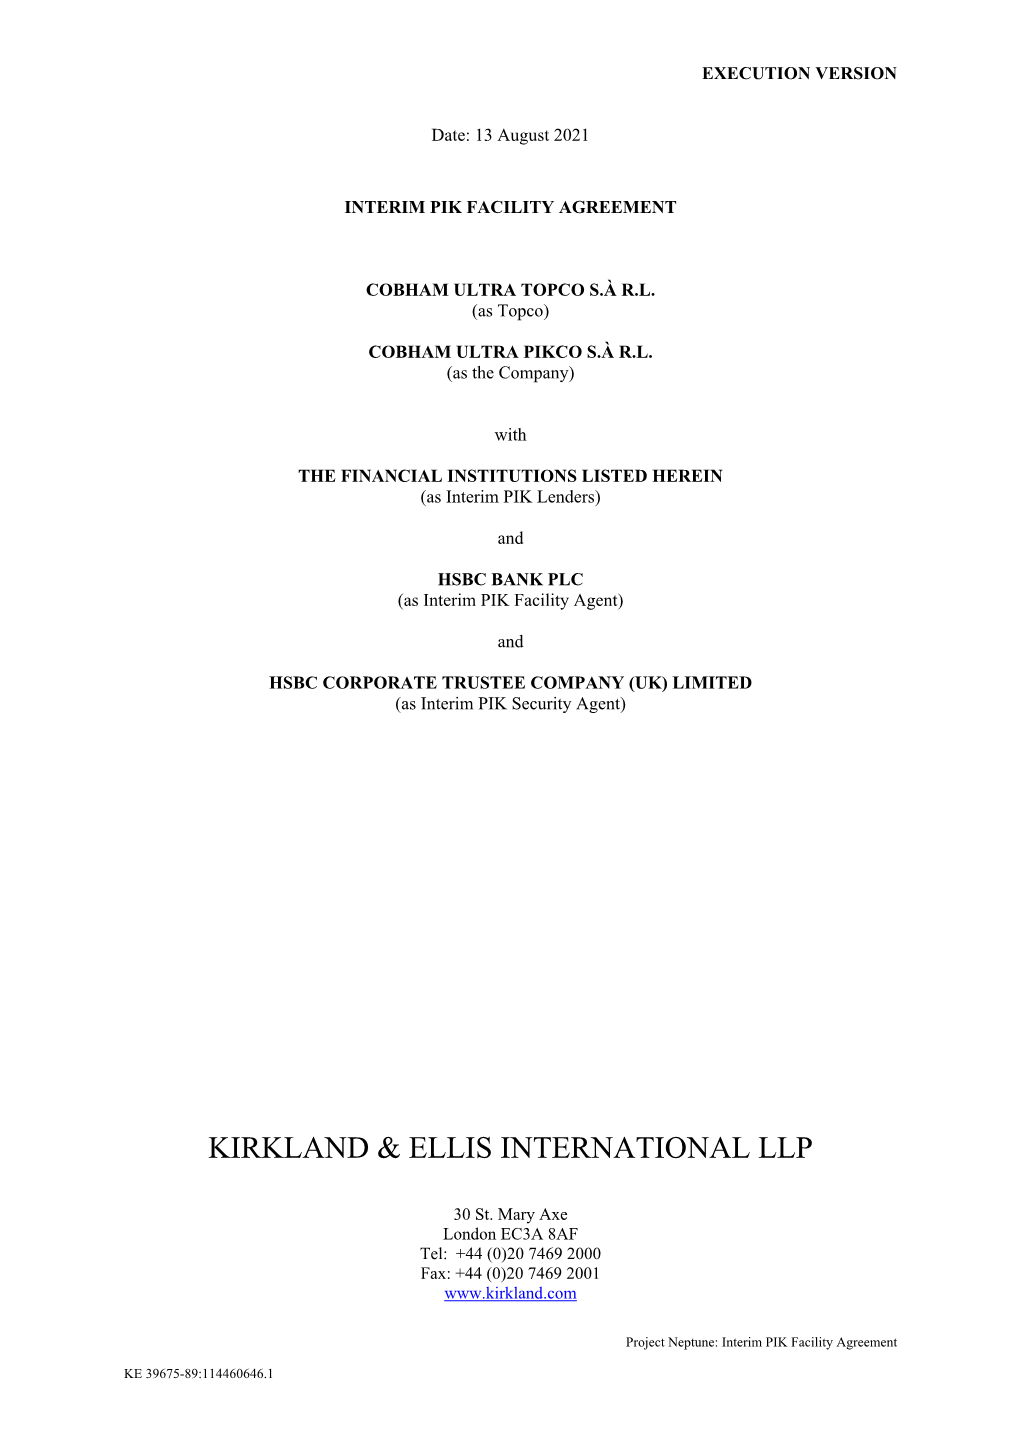 Kirkland & Ellis International